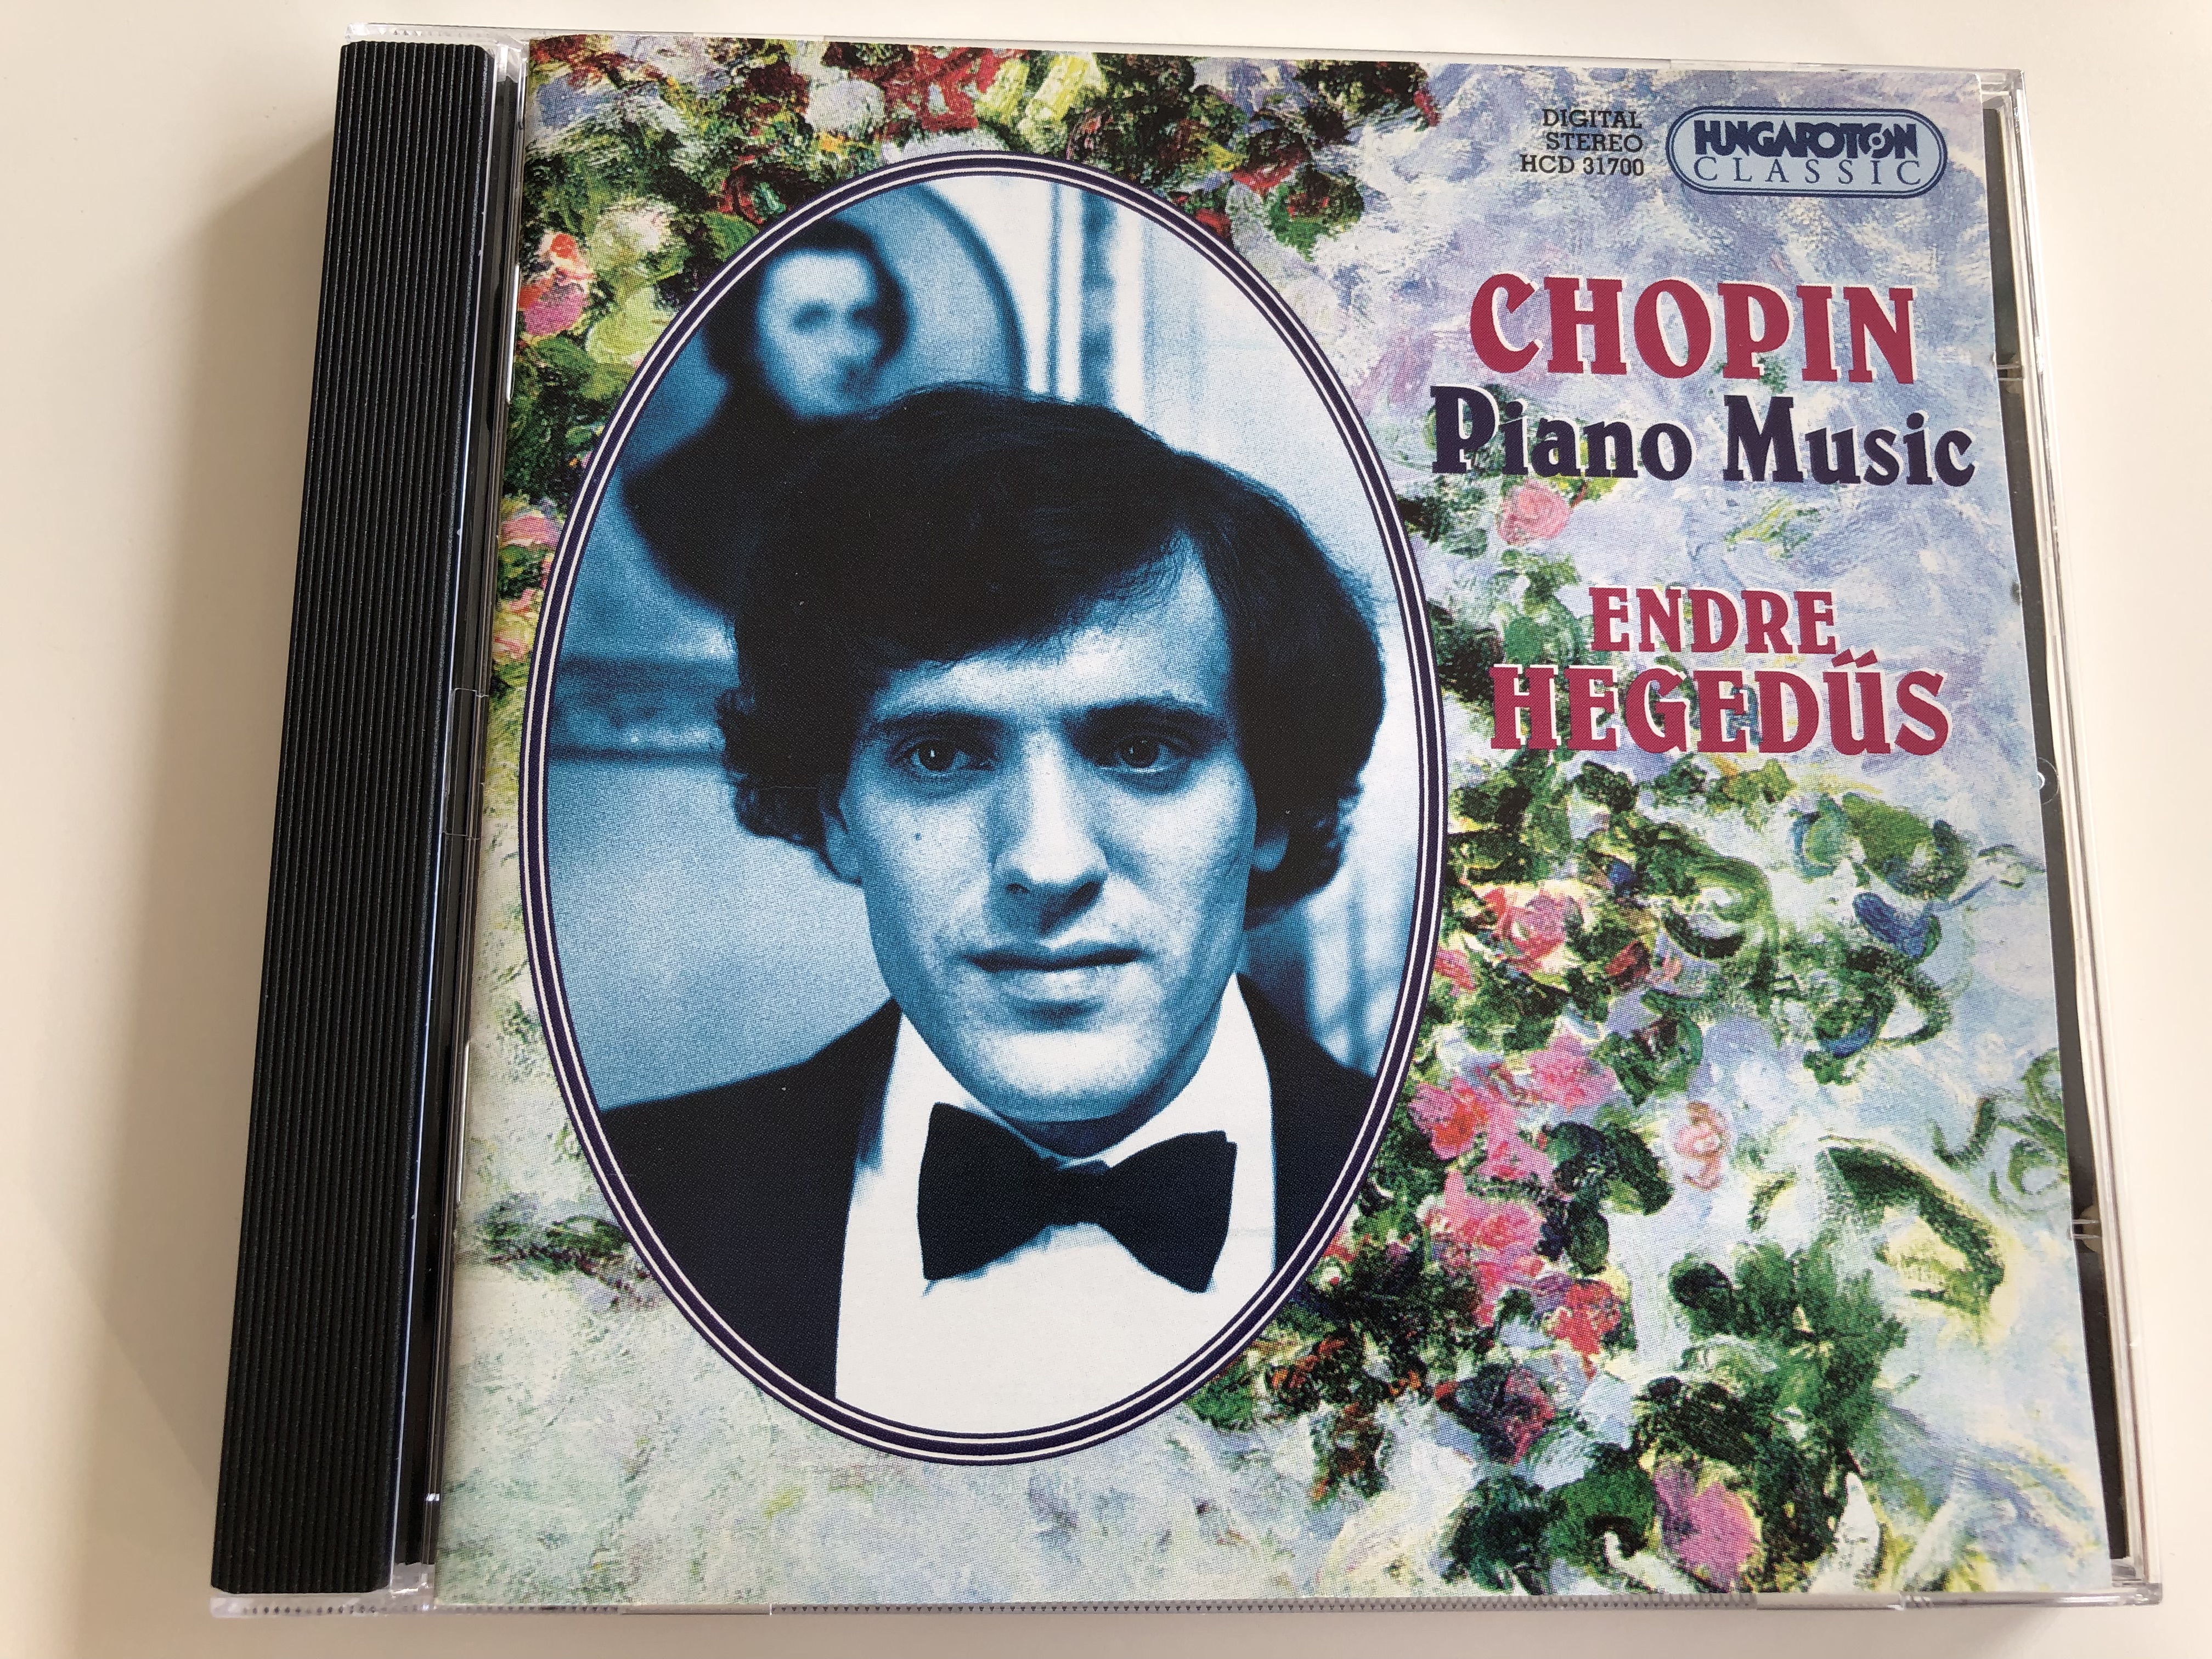 chopin-piano-music-endre-heged-s-piano-audio-cd-1996-hungaroton-hcd-31700-1-.jpg